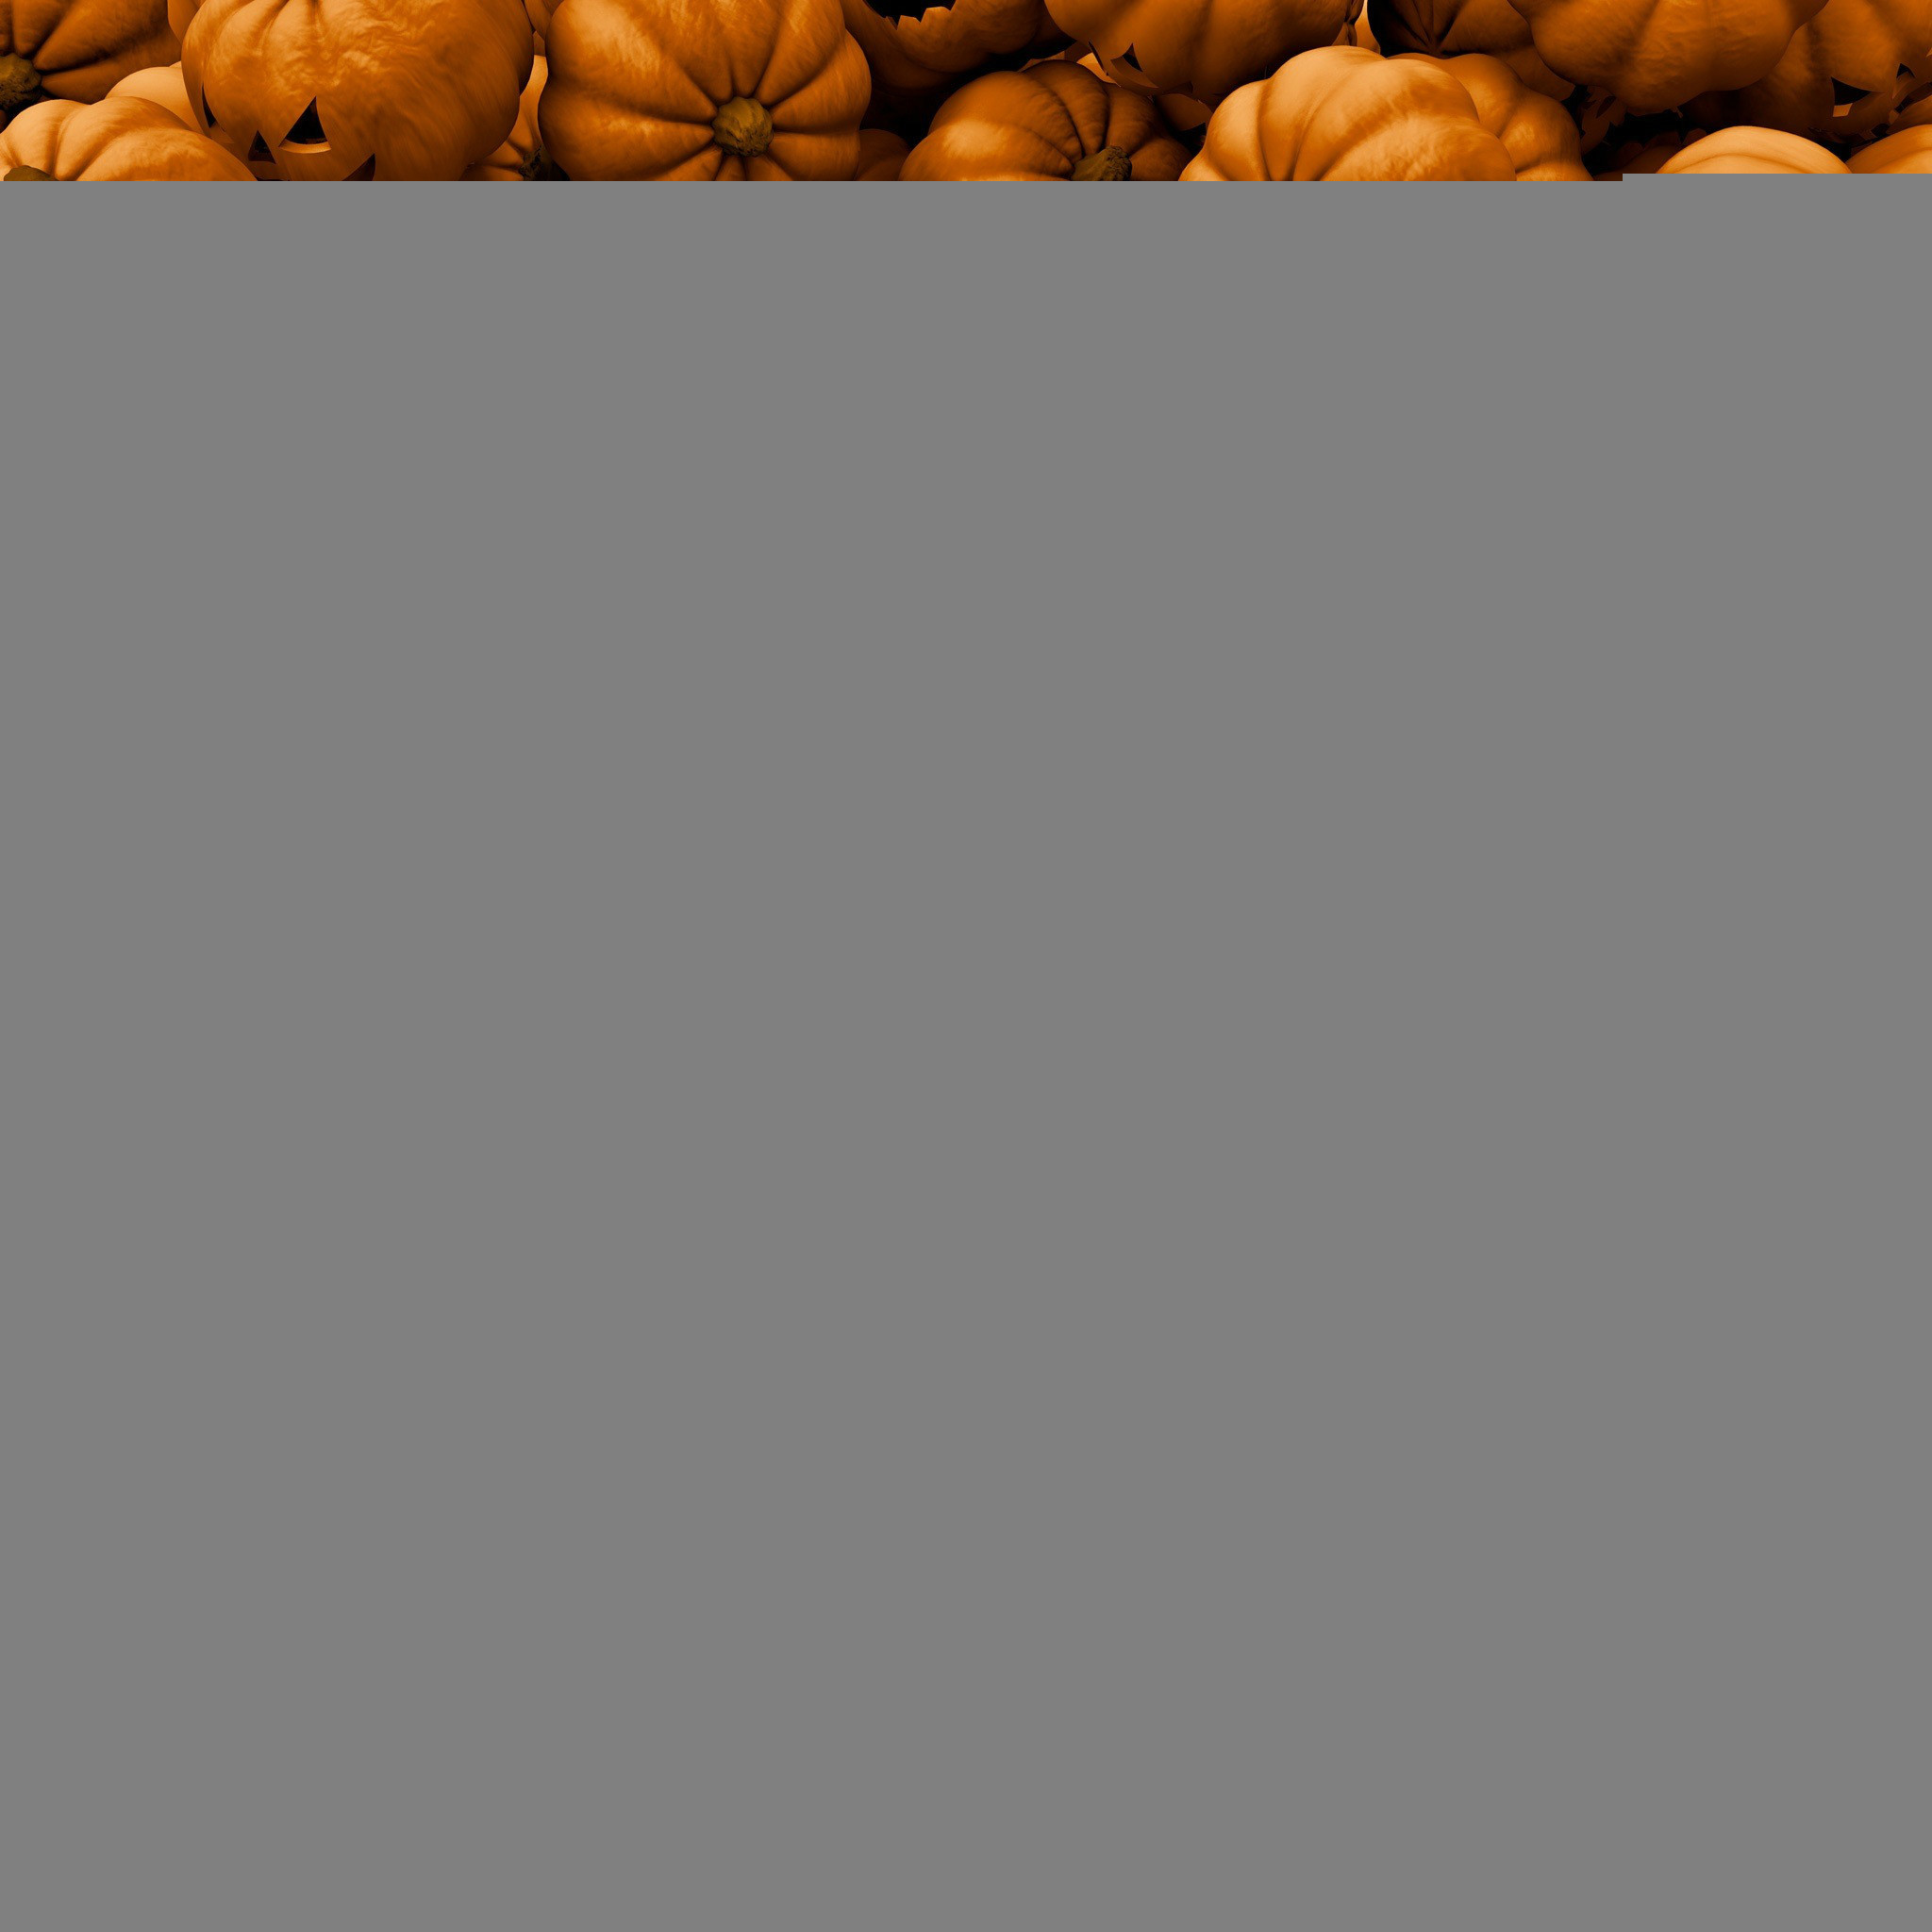 1073 0: Halloween Pumpkins iPad wallpaper